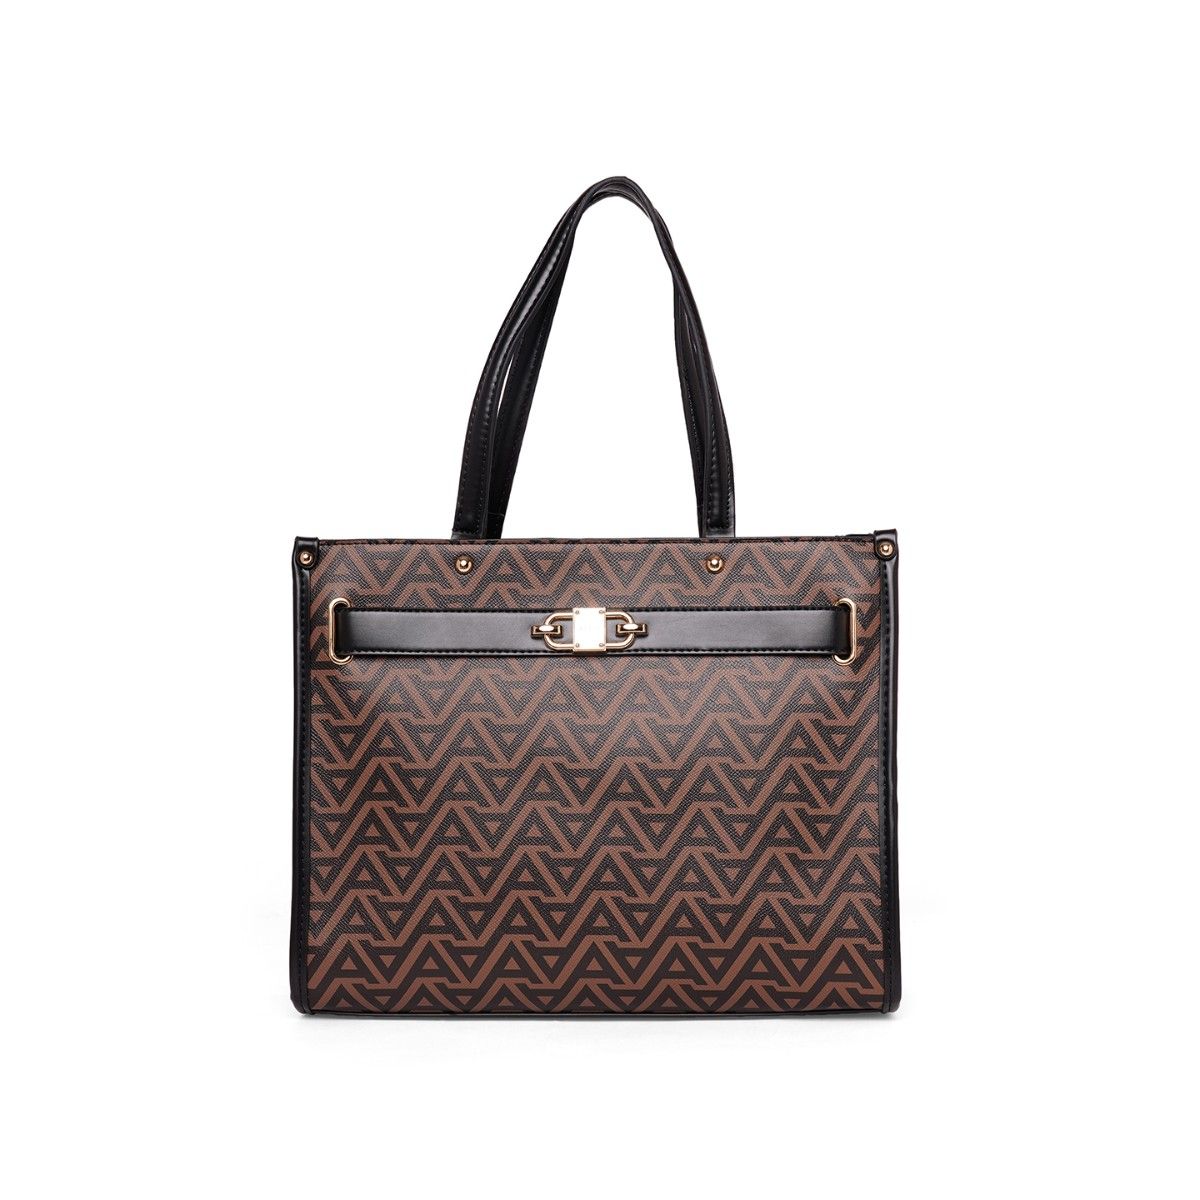 My Louis Vuitton Handbag Collection - Curls and Contours